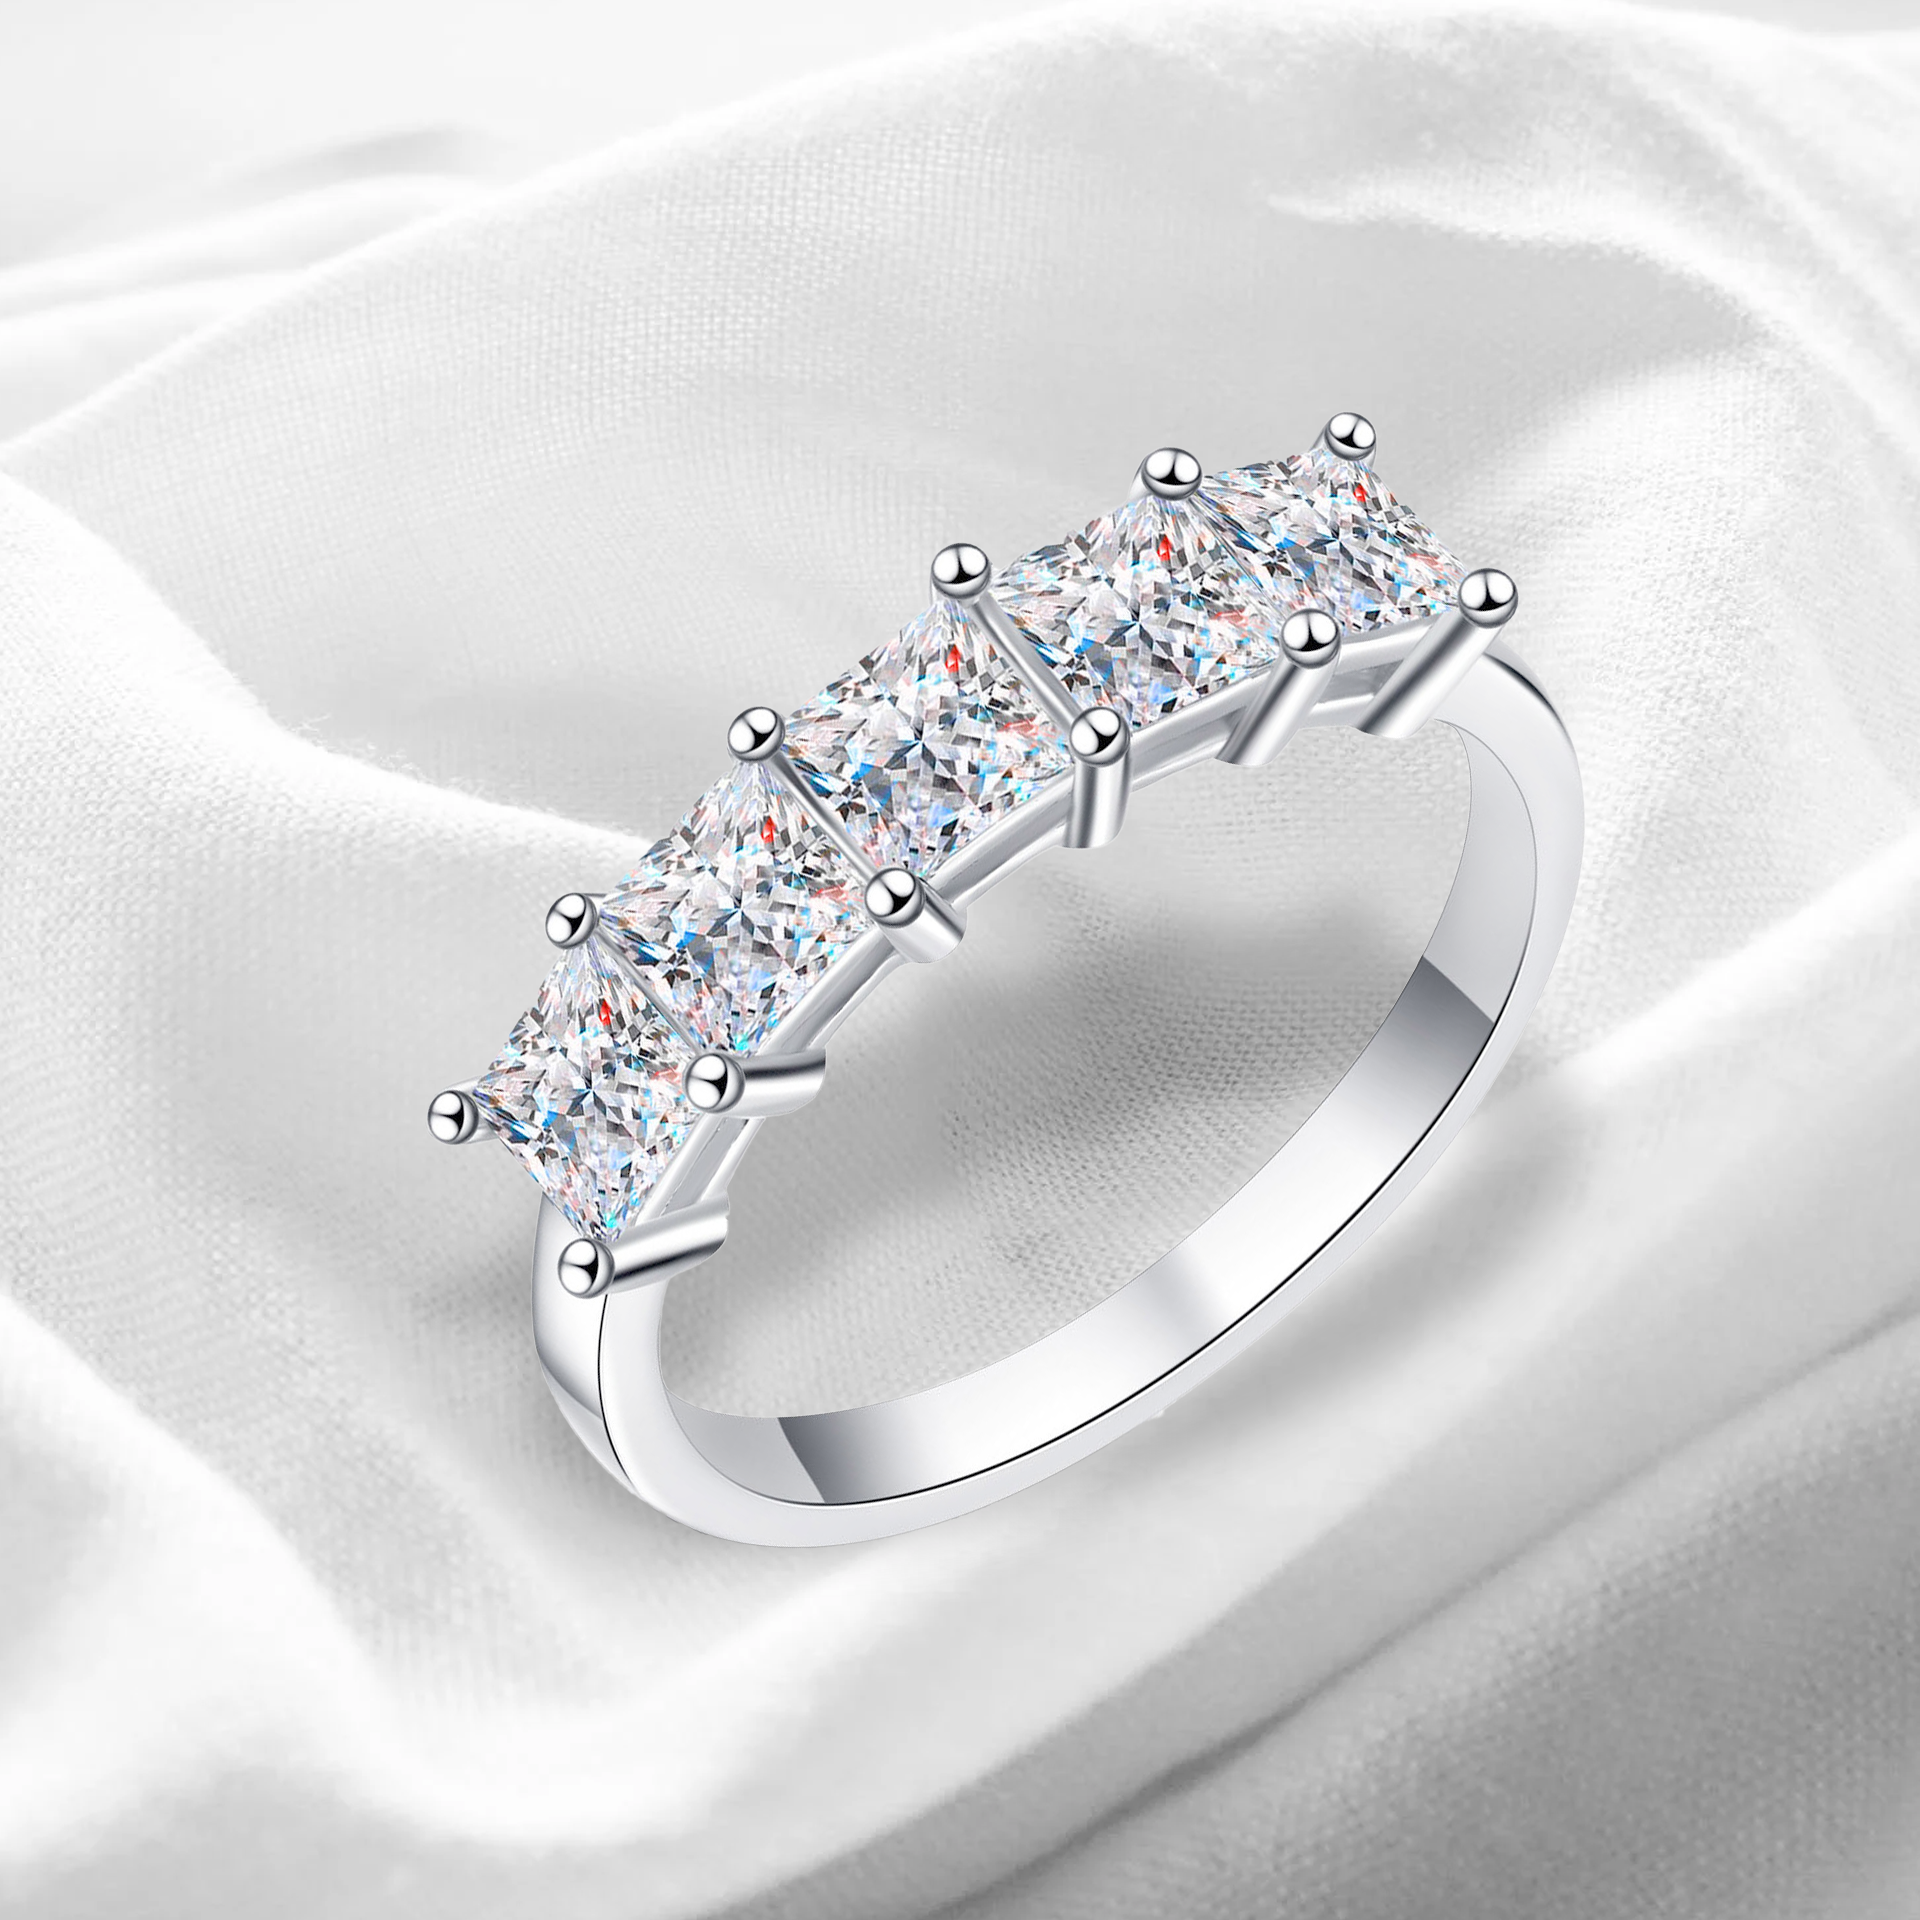 Sister's Jewelry gift for Hostess Promise ring Smooth surface for D-grade Moissanite Firmly set D-grade Moissanite